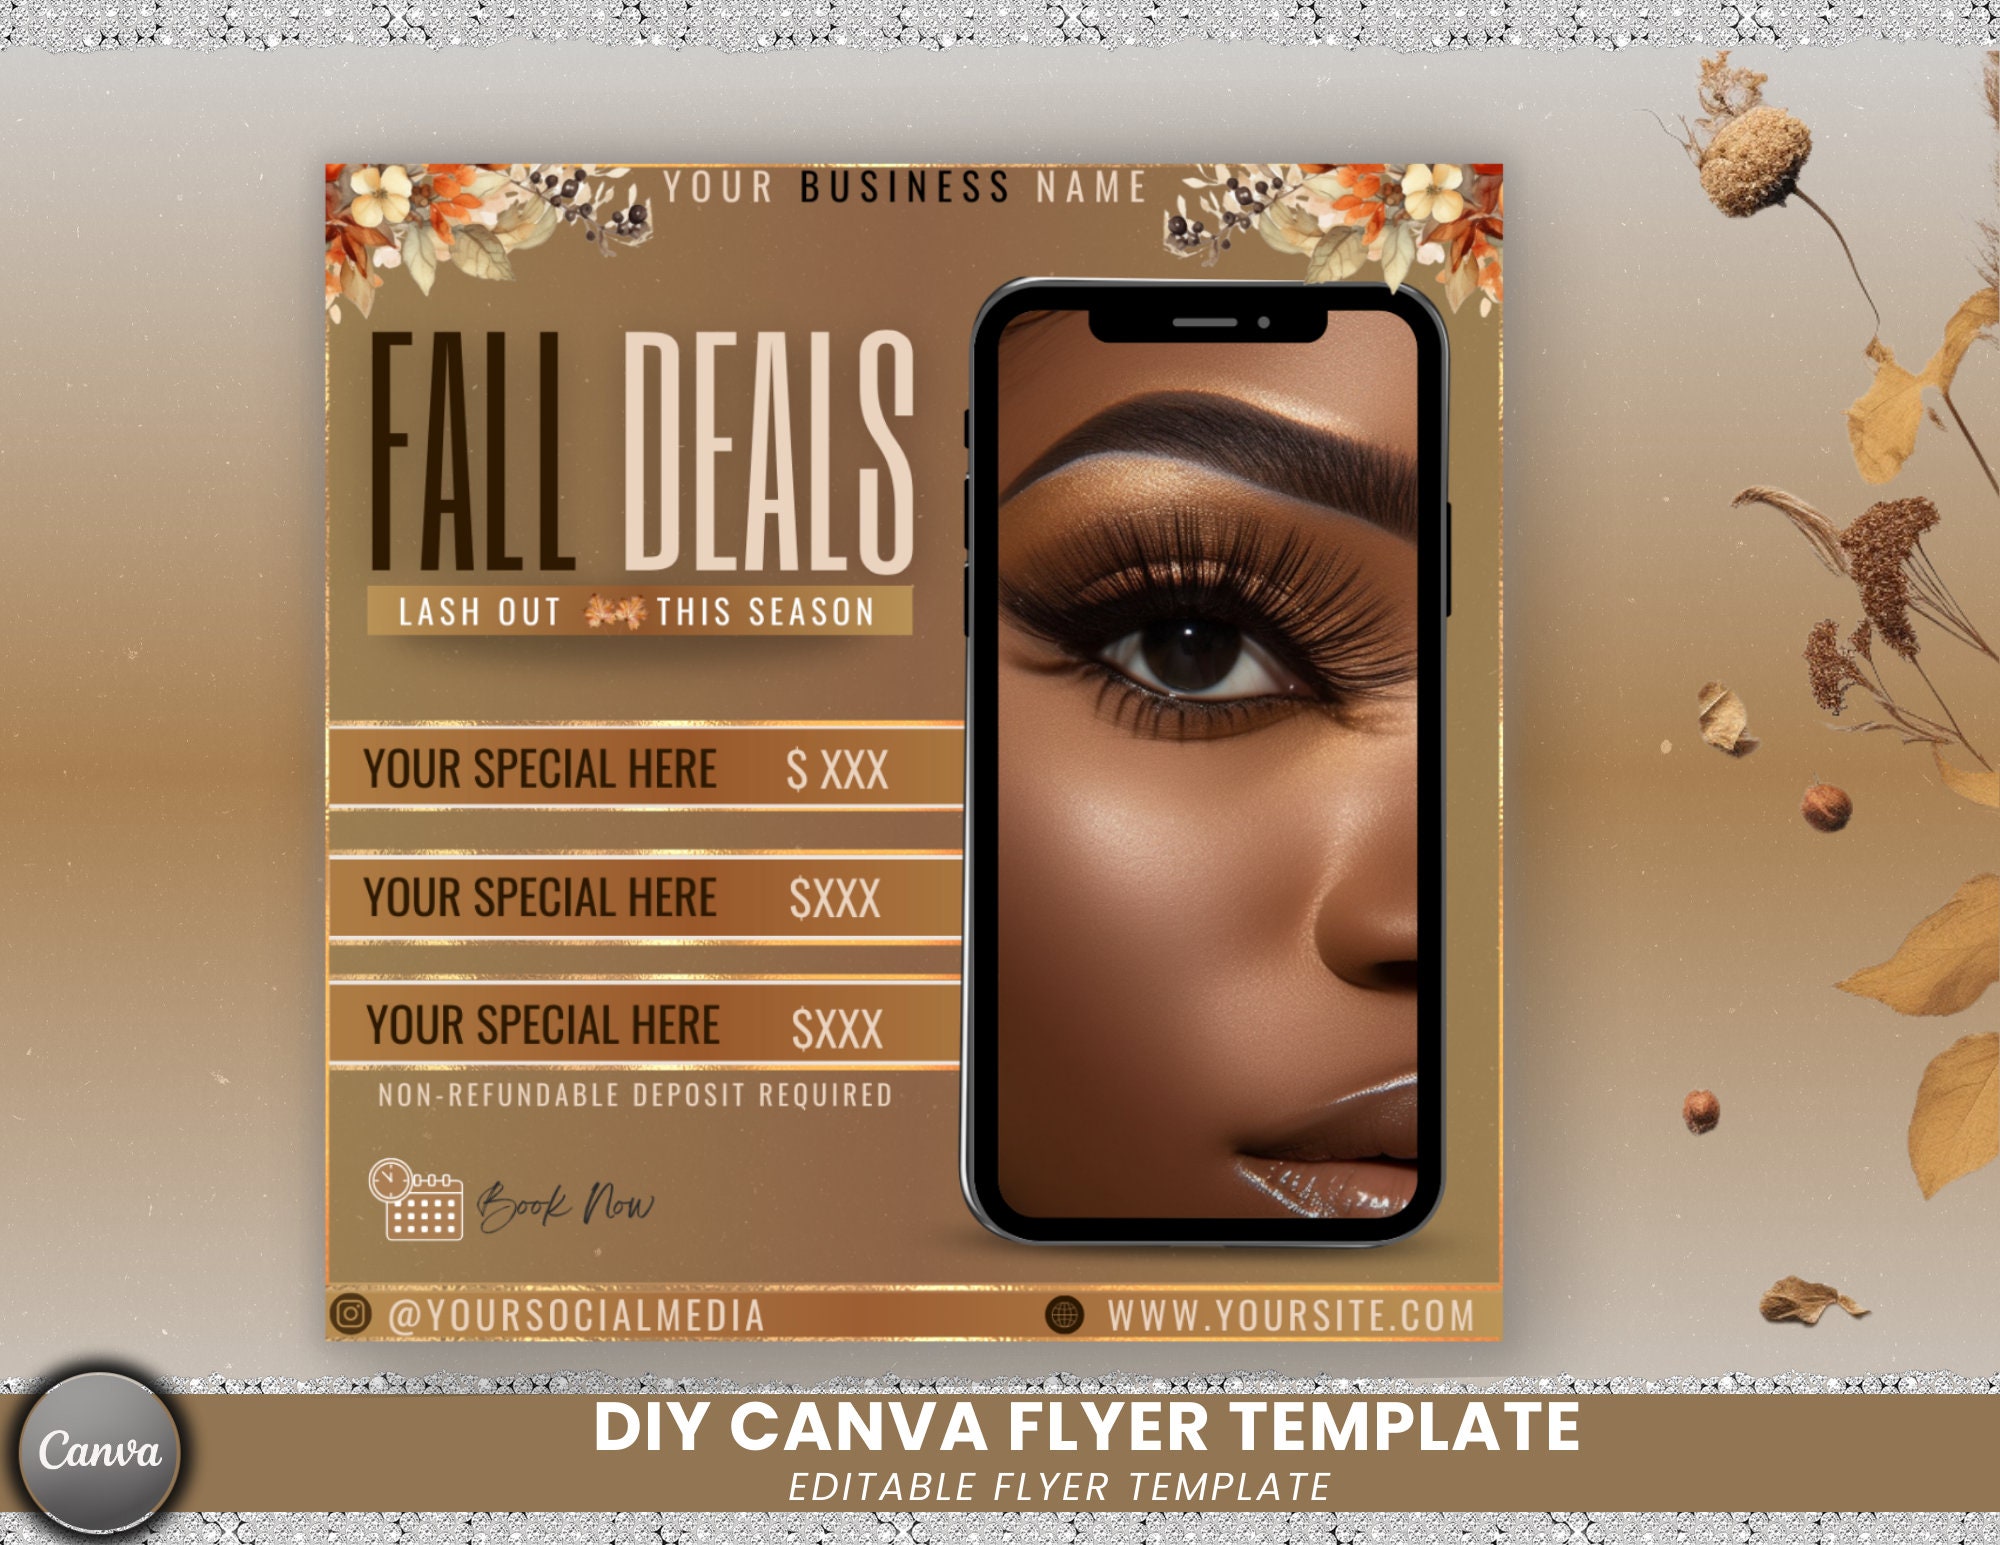 Makeup Deals Flyer, DIY Flyer Template Design, Make up Sale Flyer, Makeup  Artists Discount Flyer, Premade Makeup Pricelist Beauty Lash Flyer 